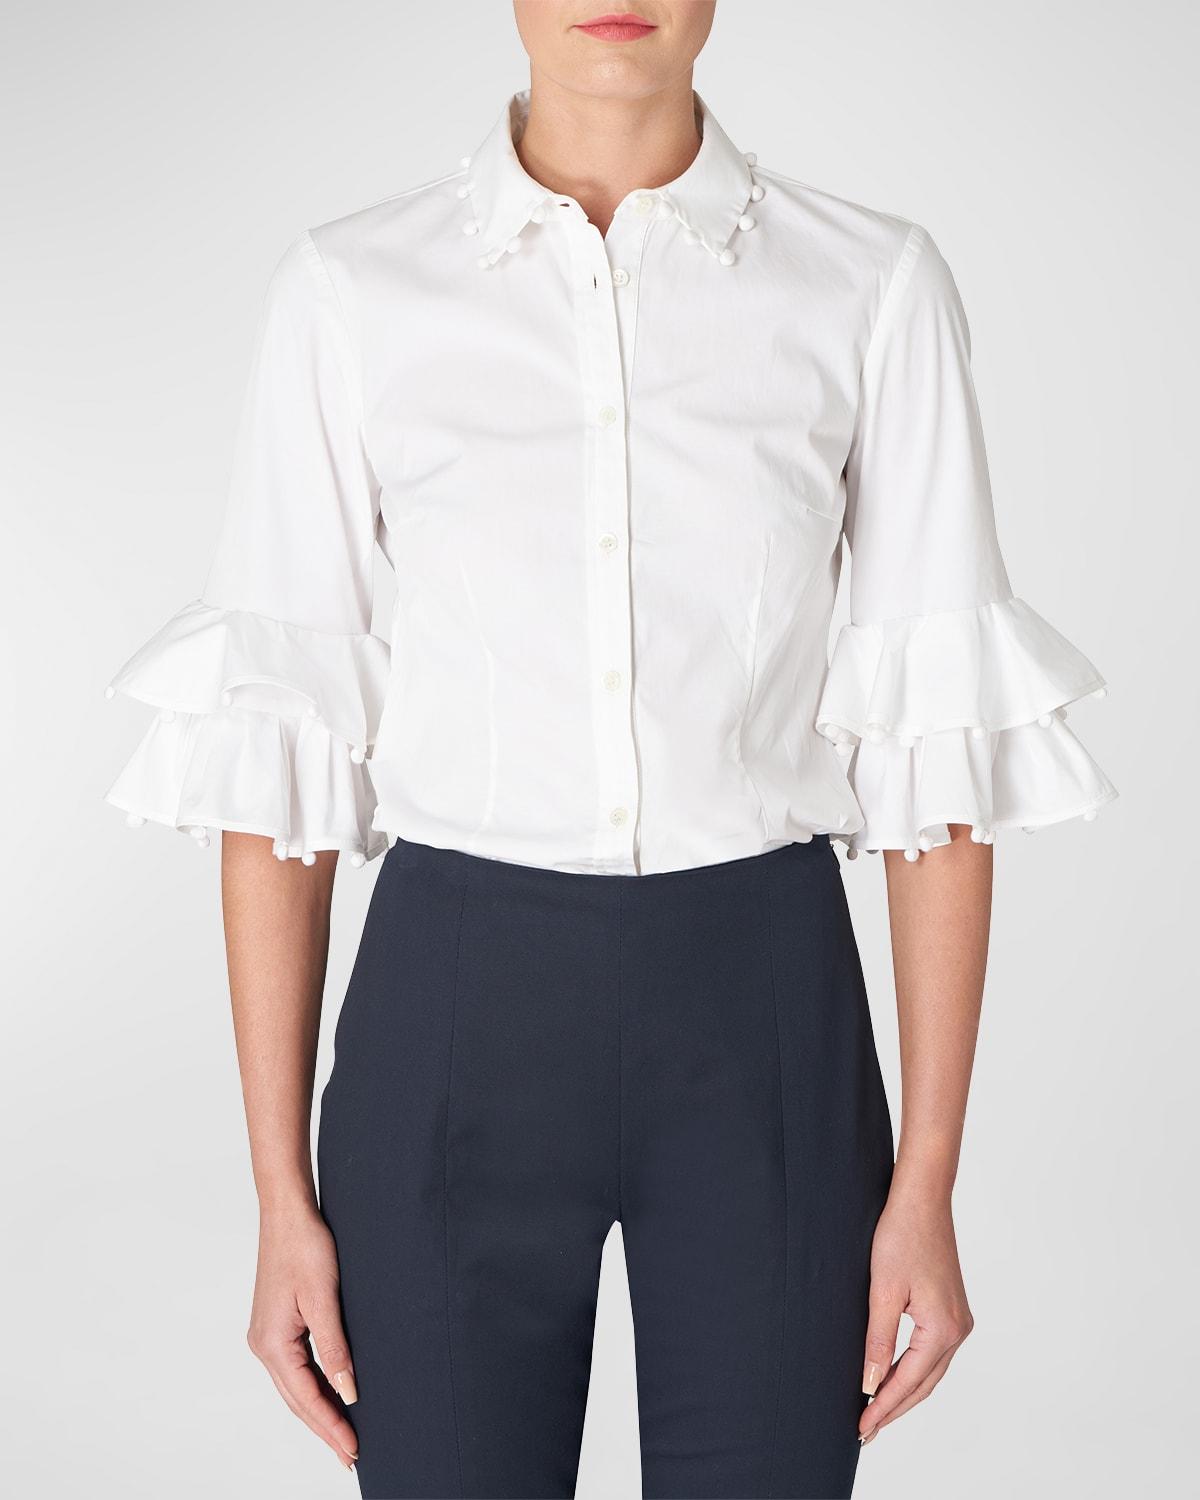 Carolina Herrera Button-front Shirt With Ruffle Trim in White | Lyst